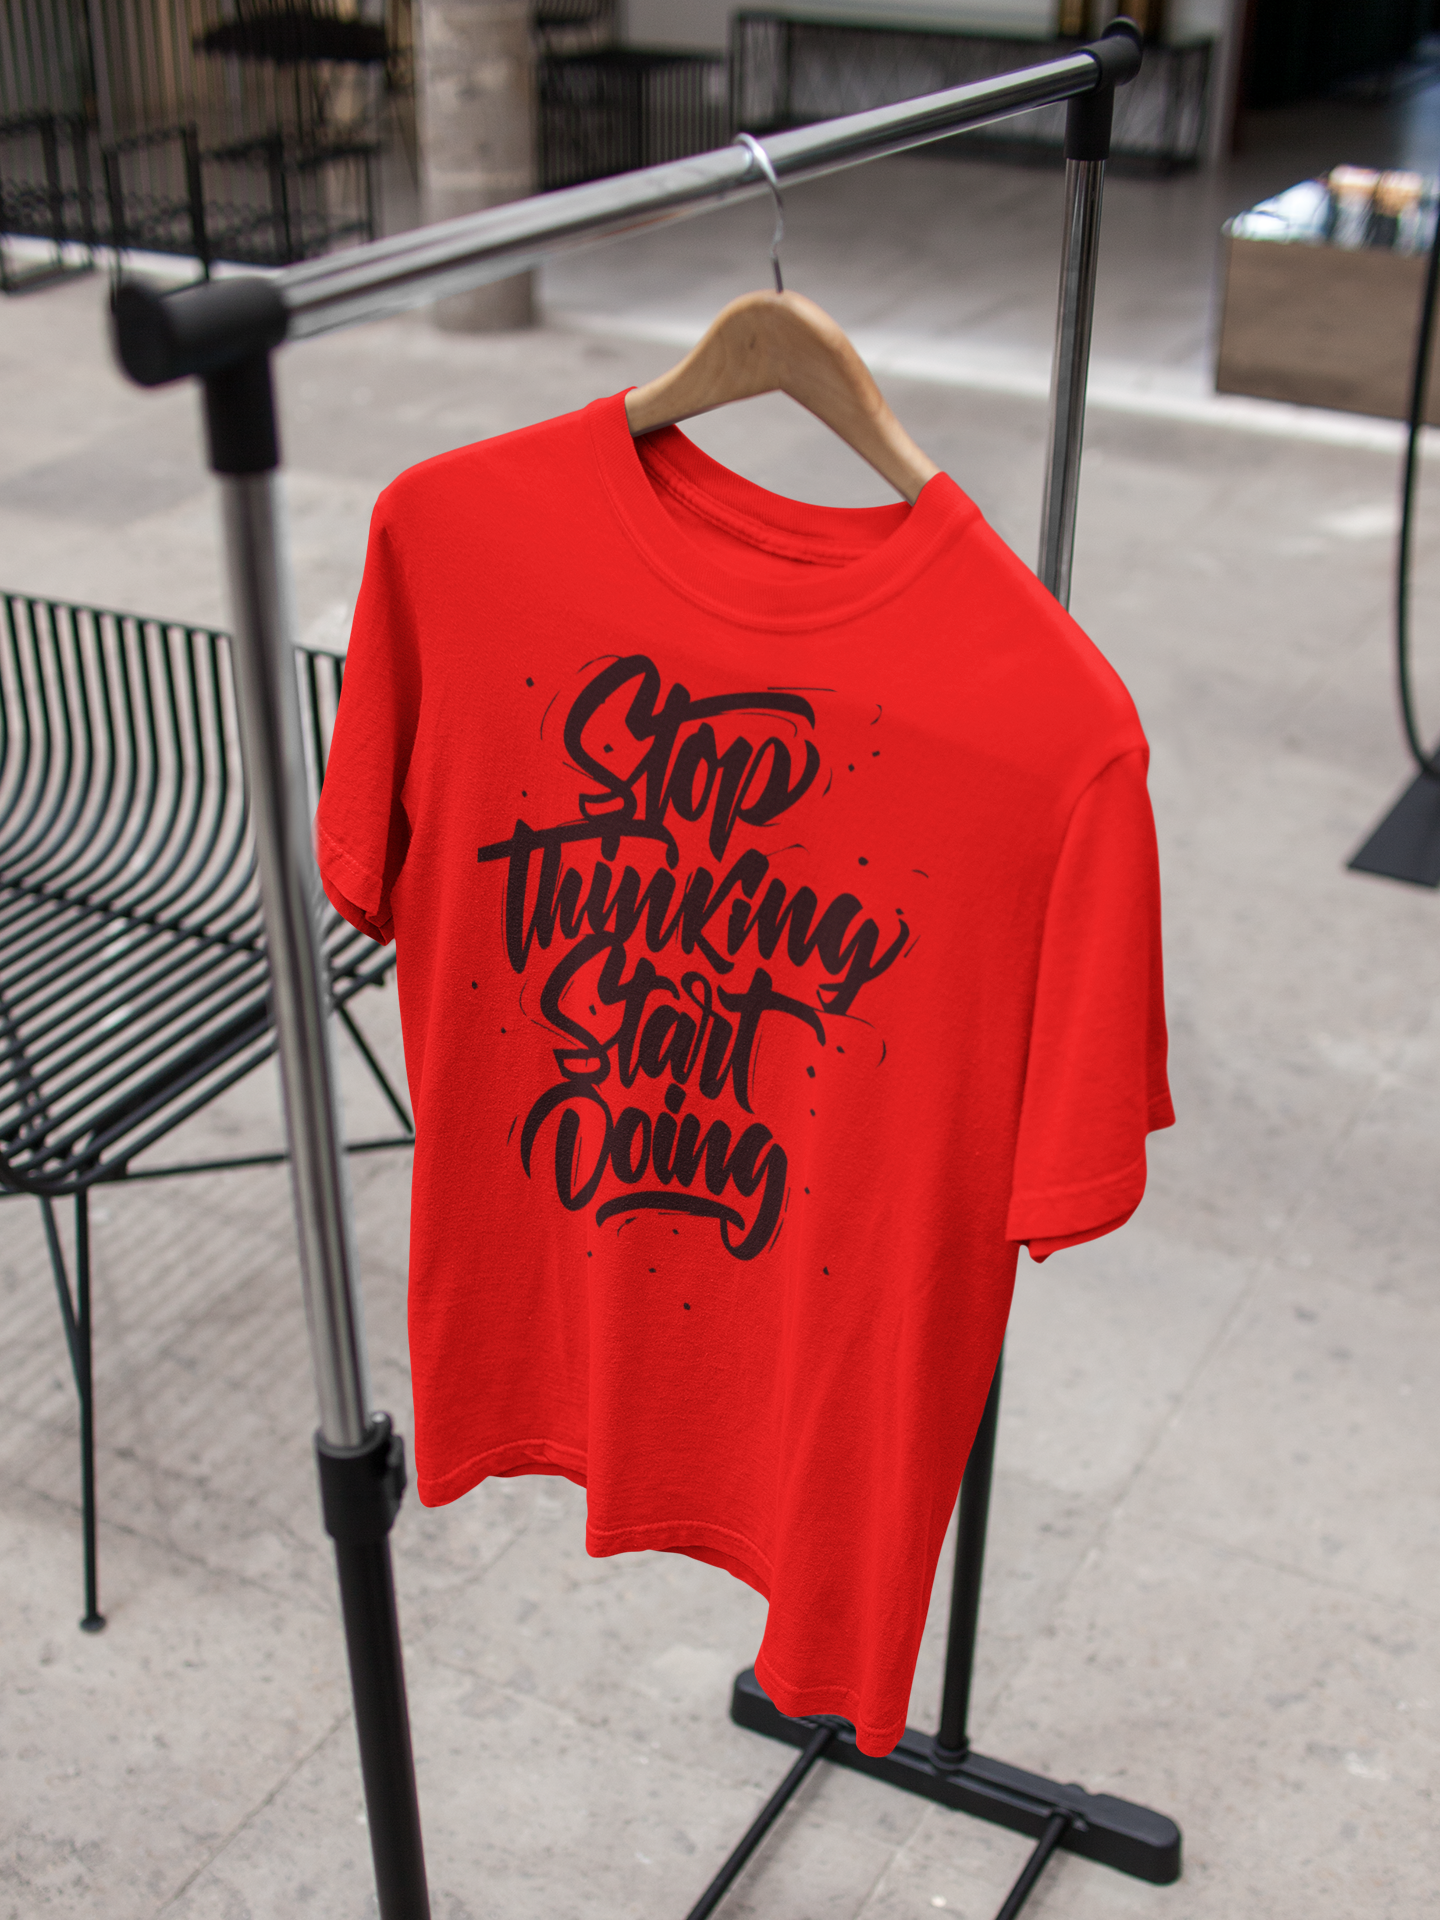 Stop Thinking Start Doing Print T-Shirt